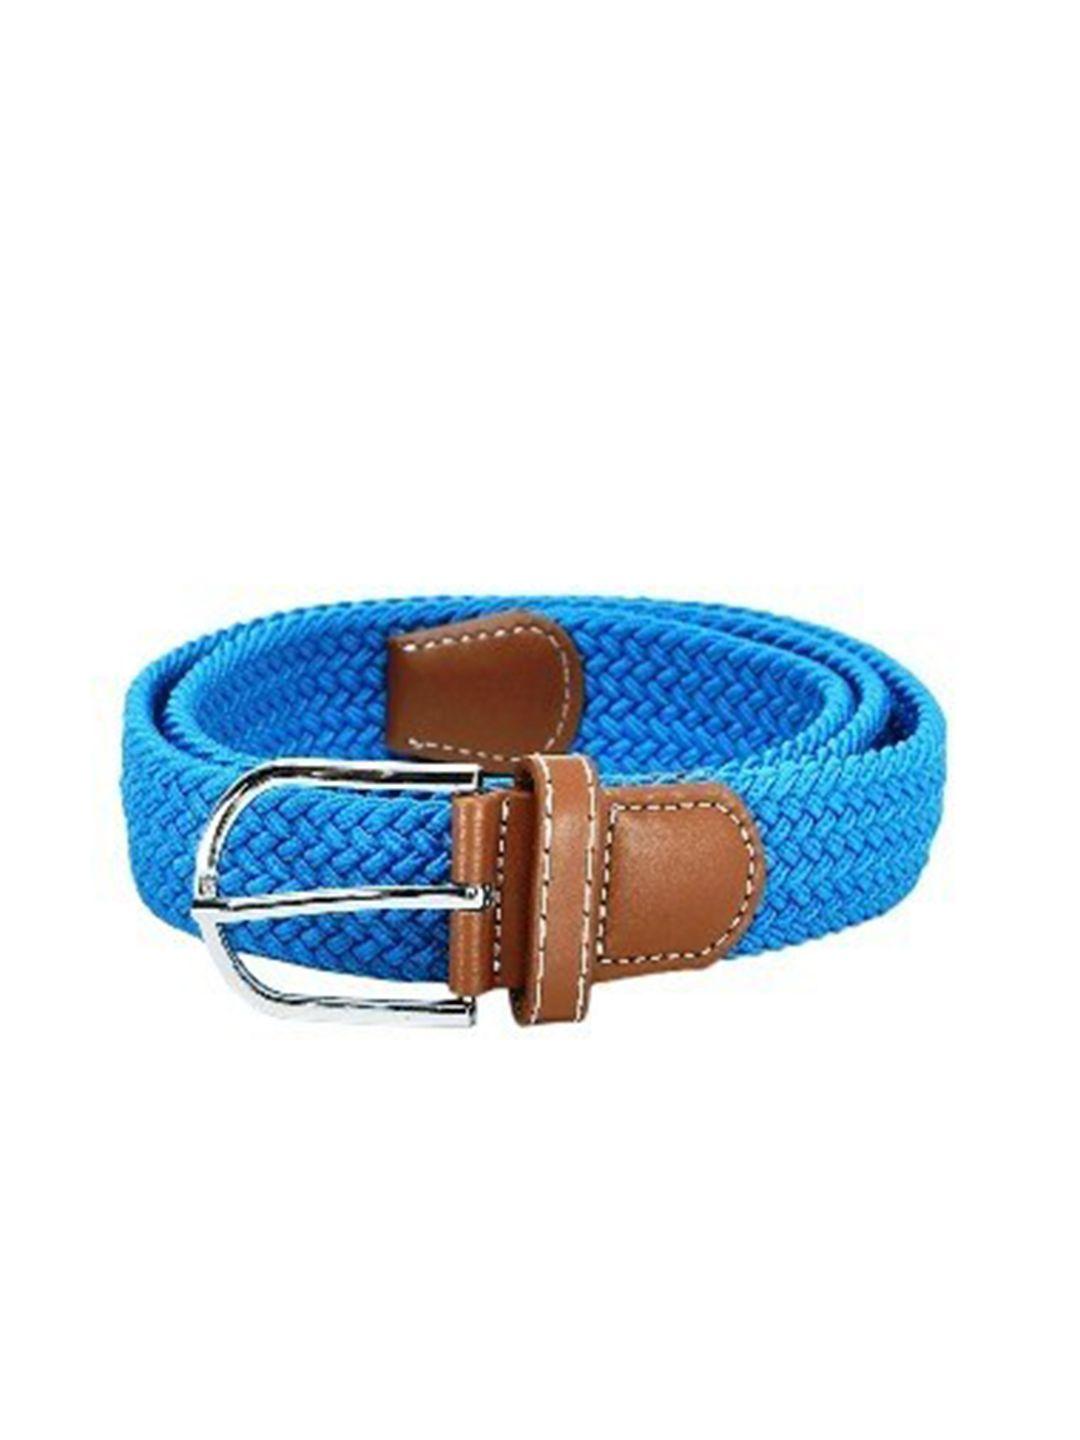 kastner unisex blue braided stretchable canvas belt